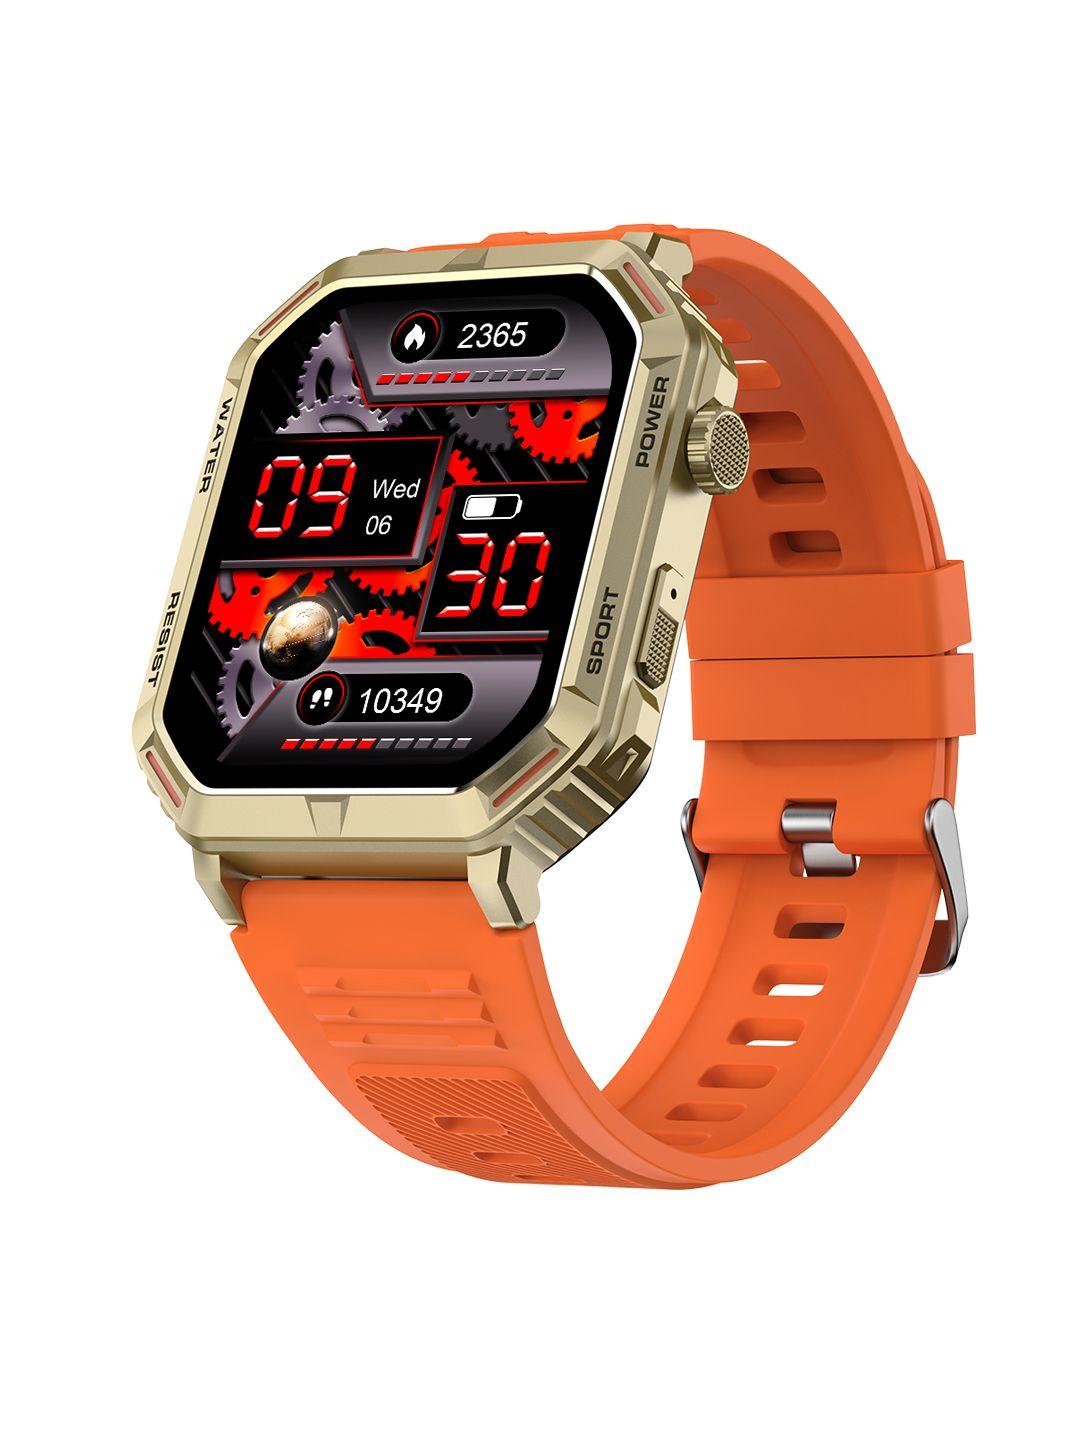 fire-boltt commando 1.96" hd display smartwatch with bluetooth calling & diy watch face